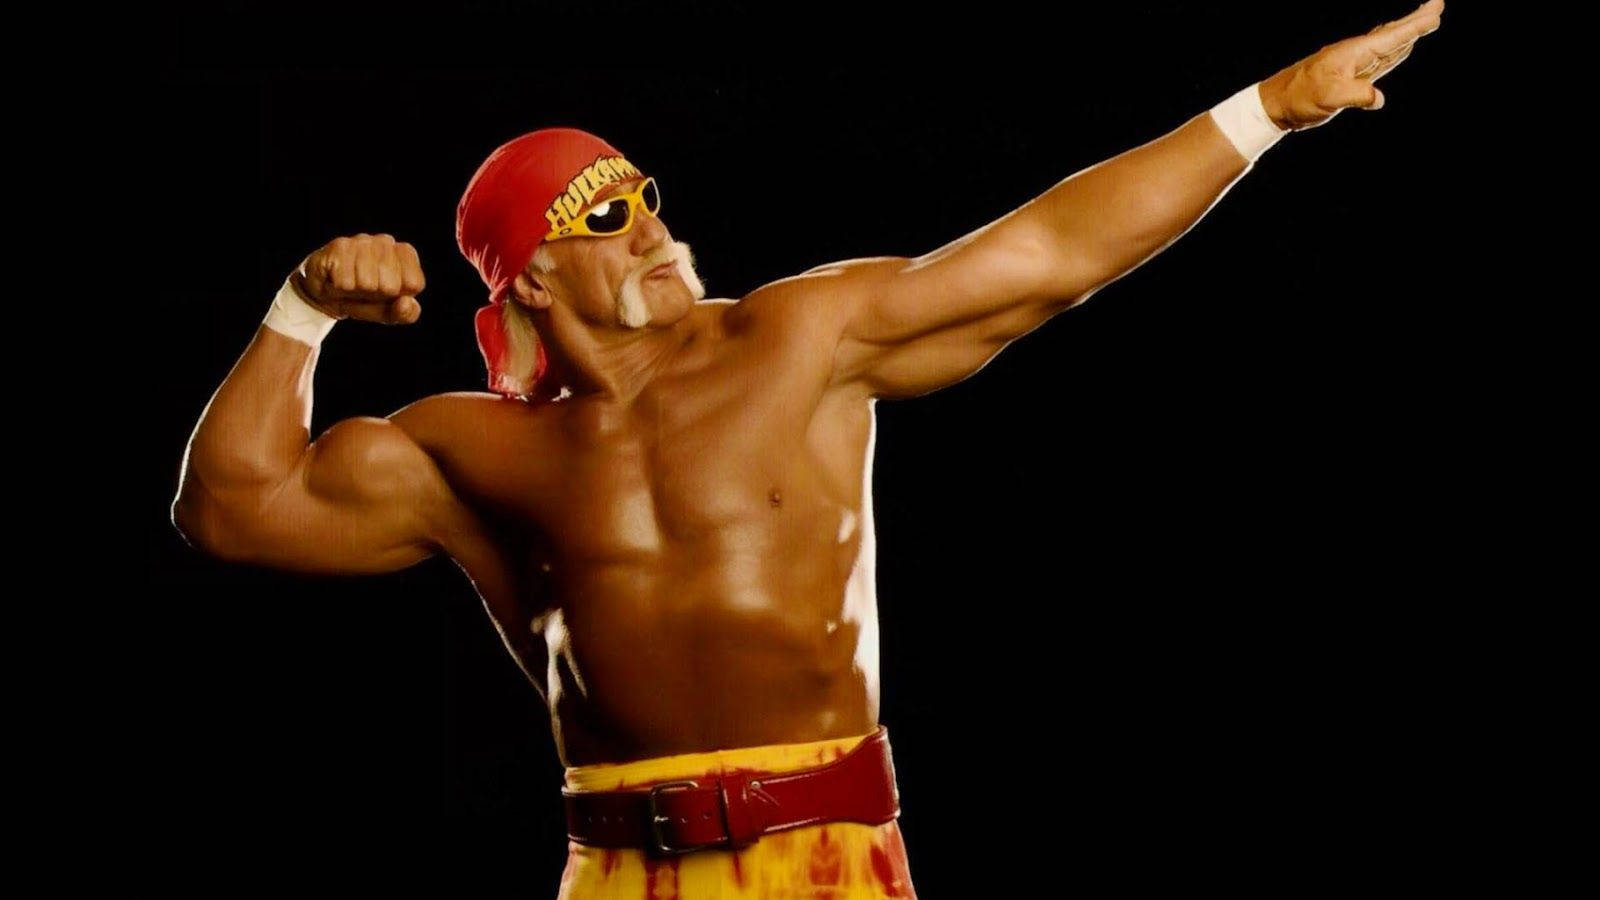 Hulk Hogan Superman Pose Wallpaper